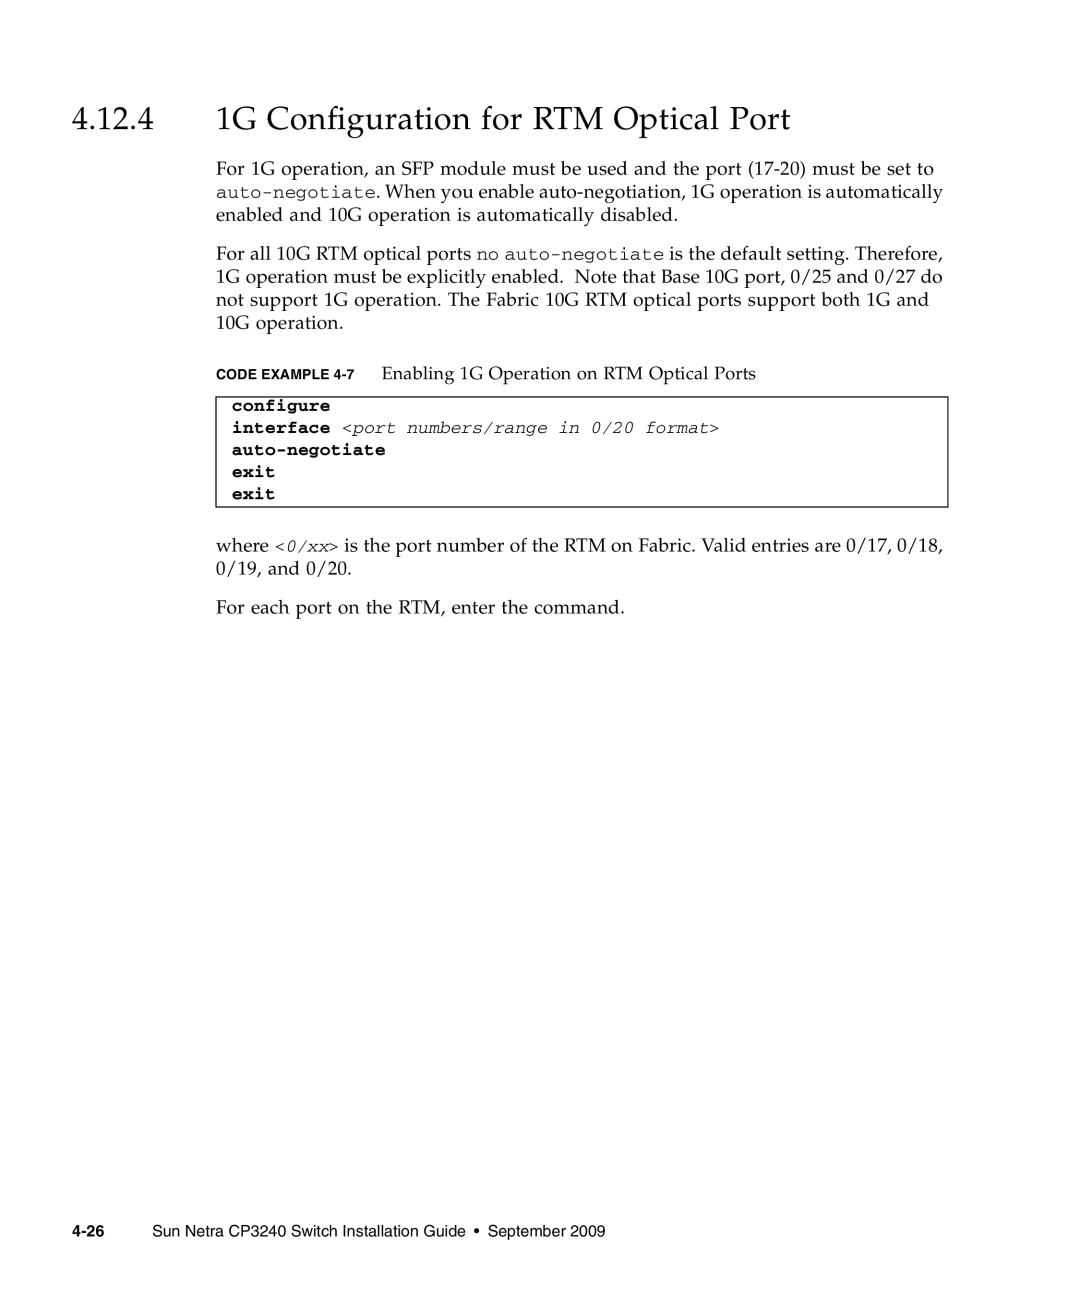 Sun Microsystems CP3240 manual 4.12.4 1G Configuration for RTM Optical Port, configure, auto-negotiate exit exit 